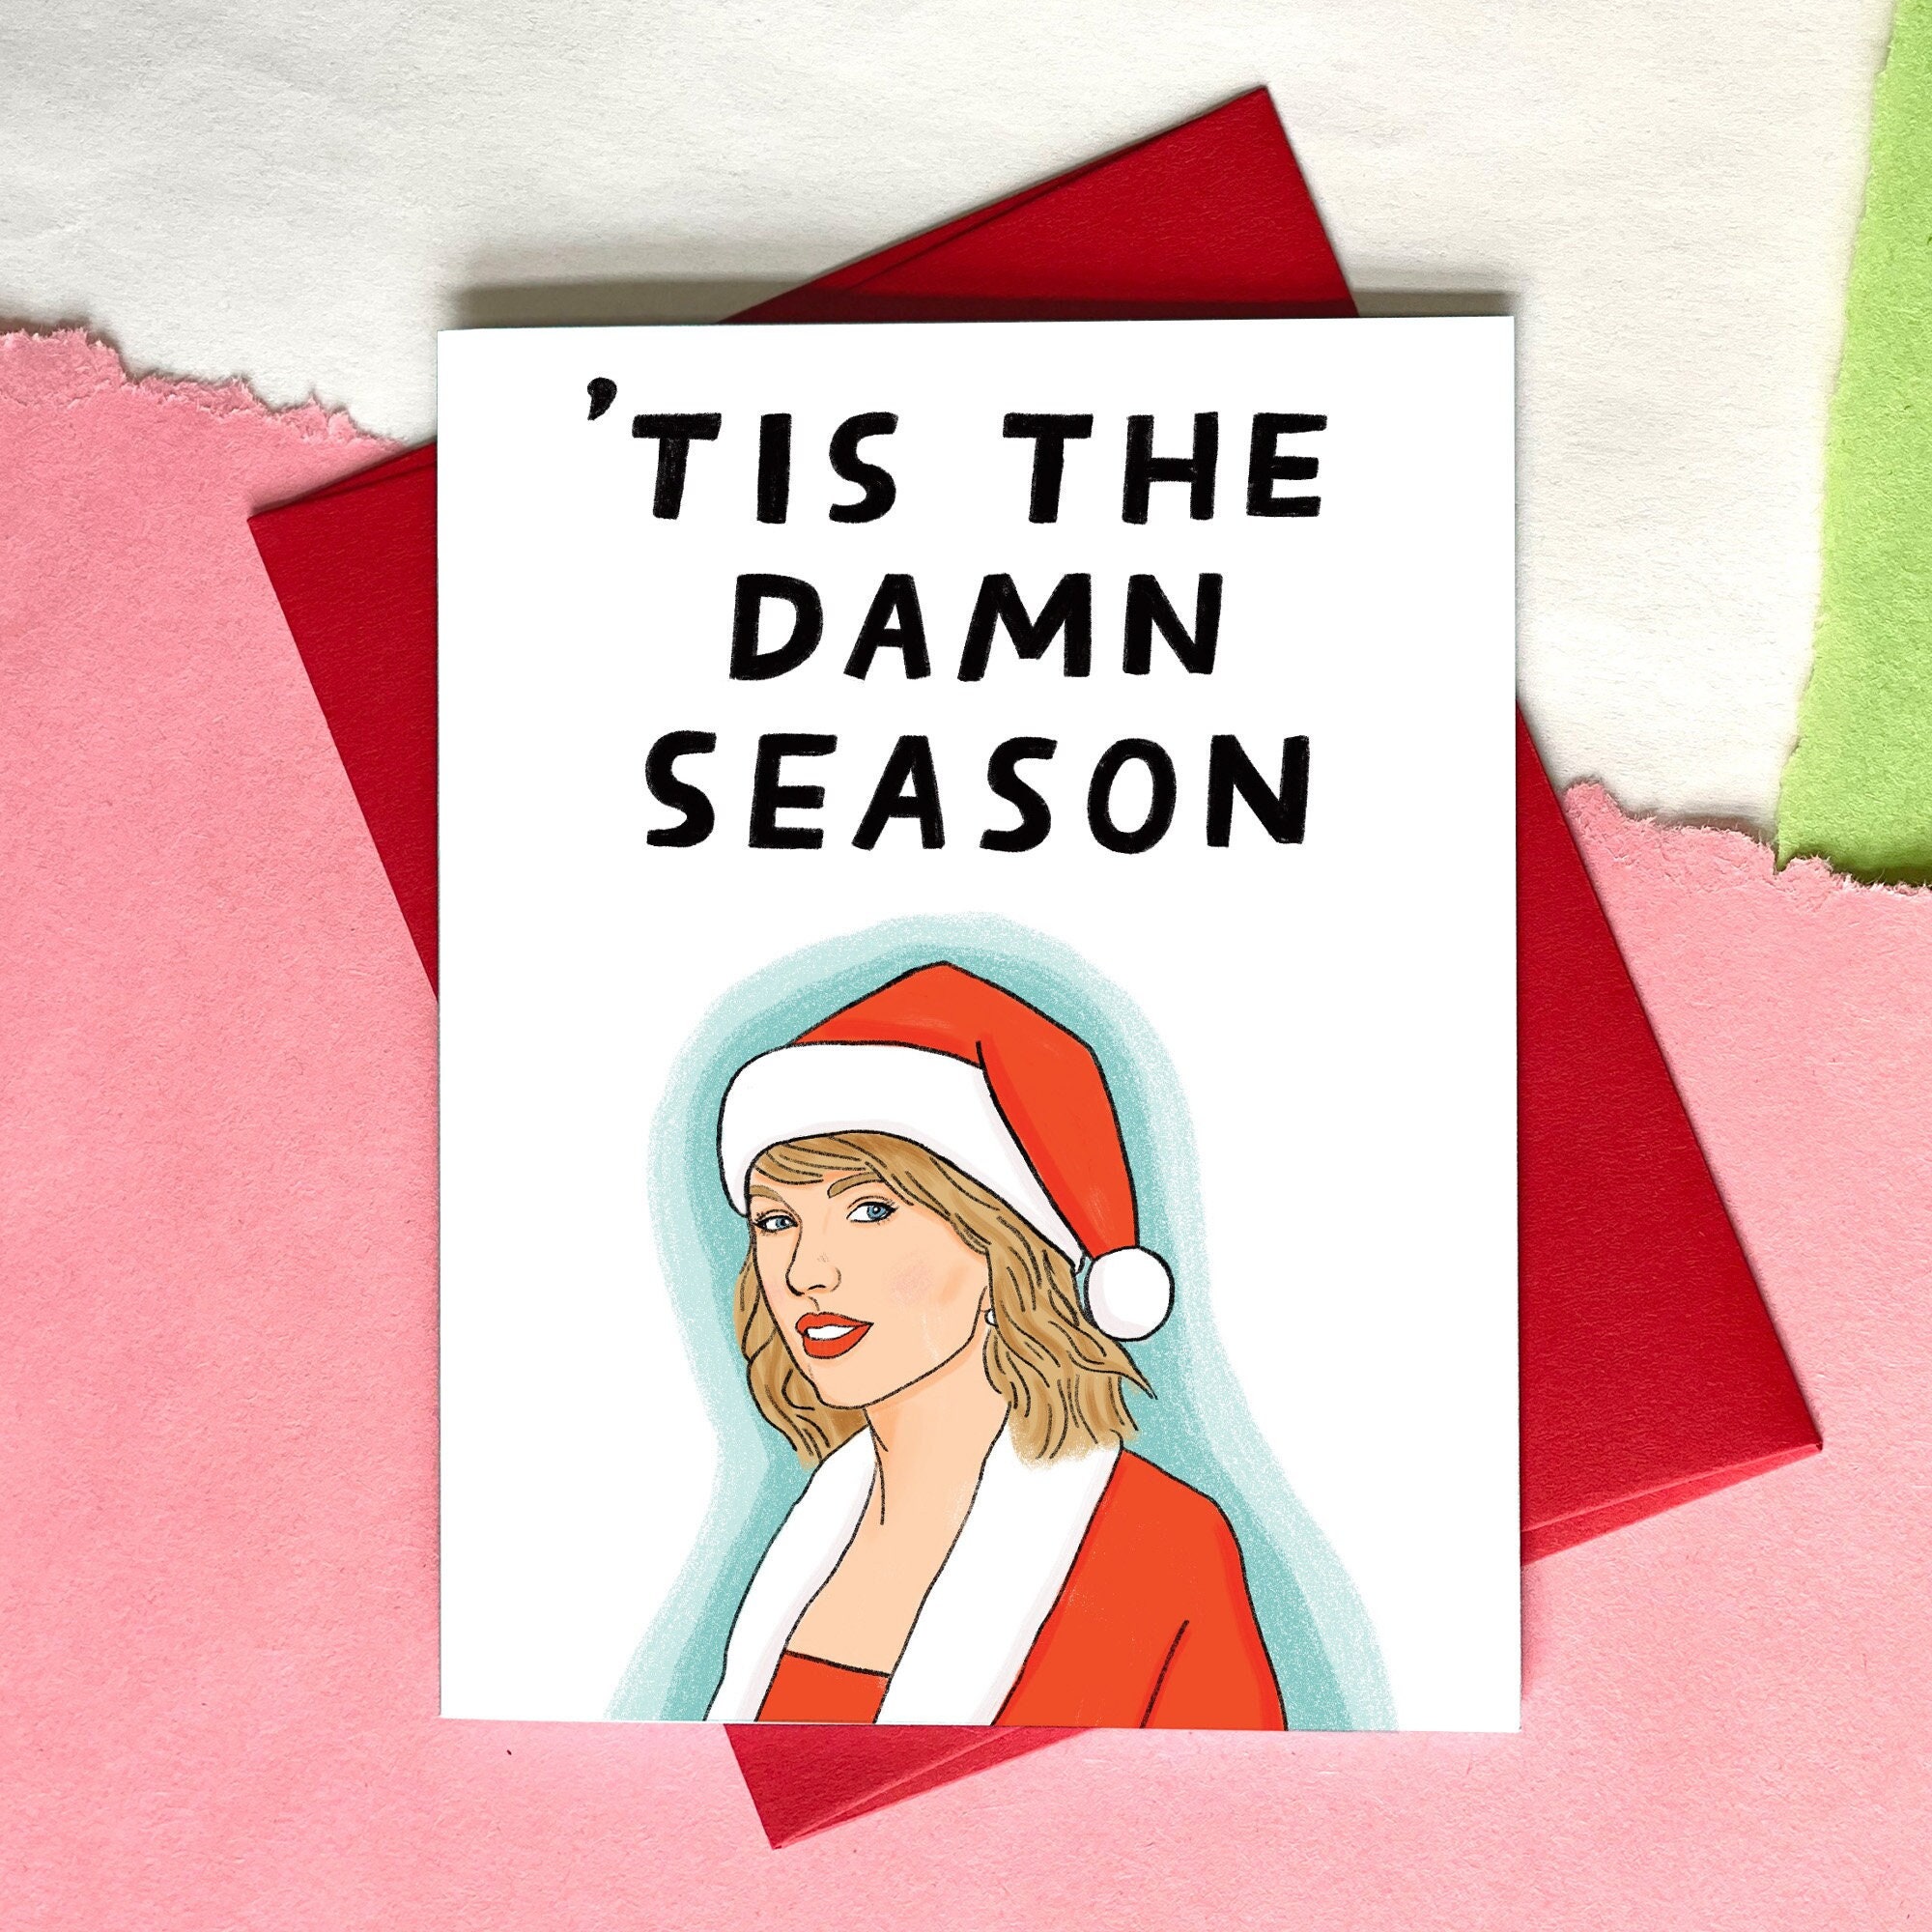 Taylor Swift Christmas Card for Swifties